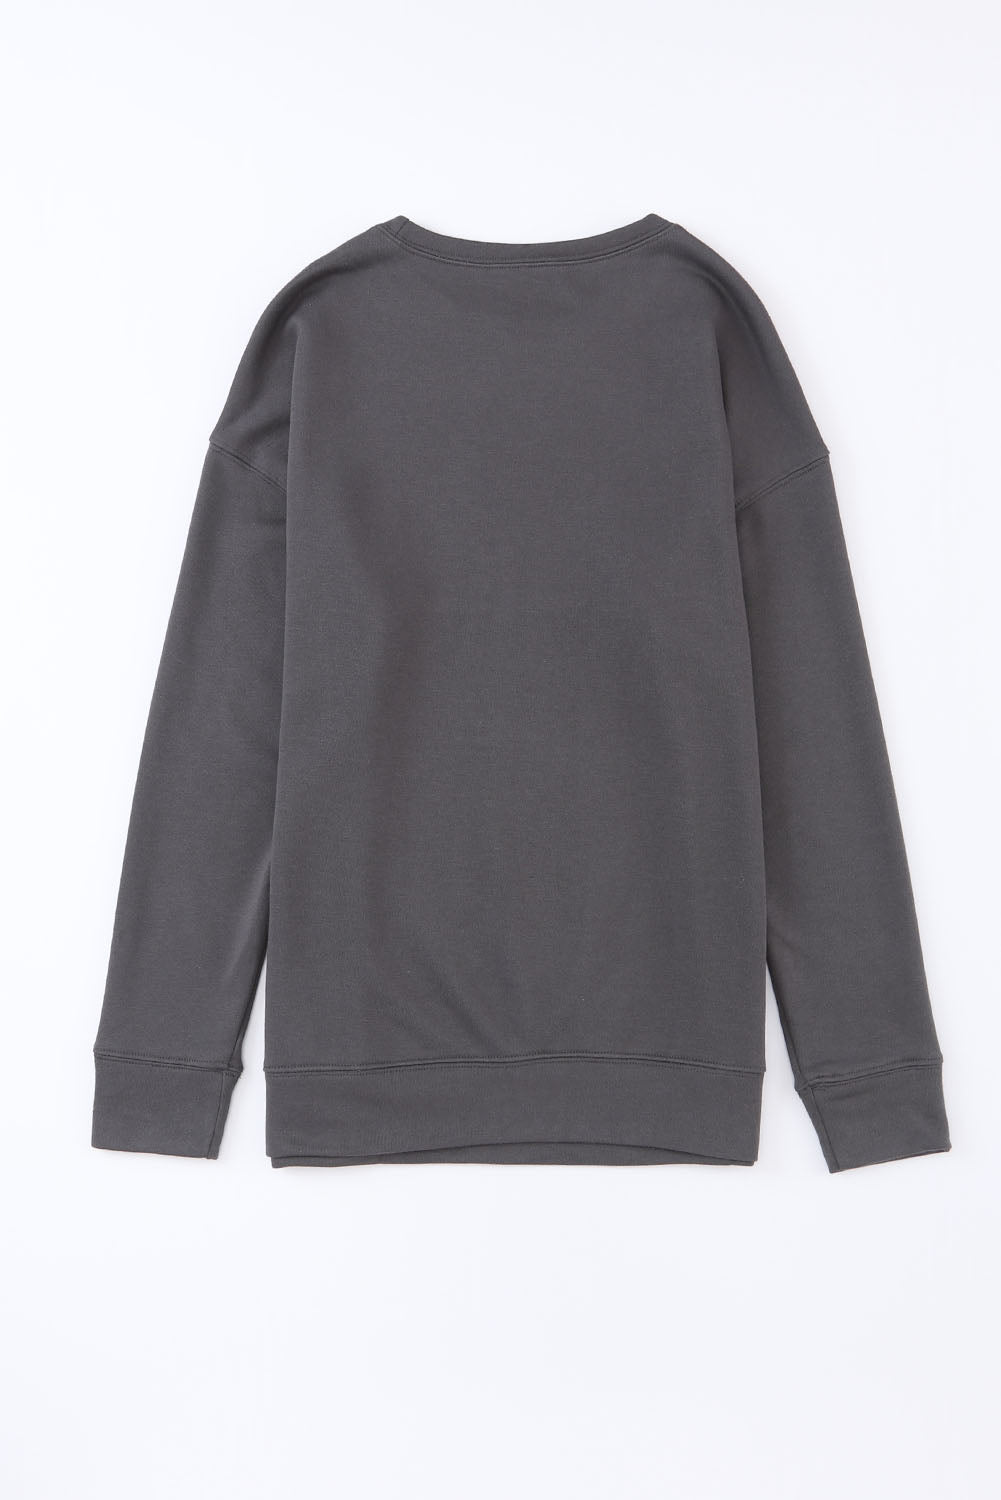 COOL MOMS CLUB Print Drop Shoulder Sweatshirt